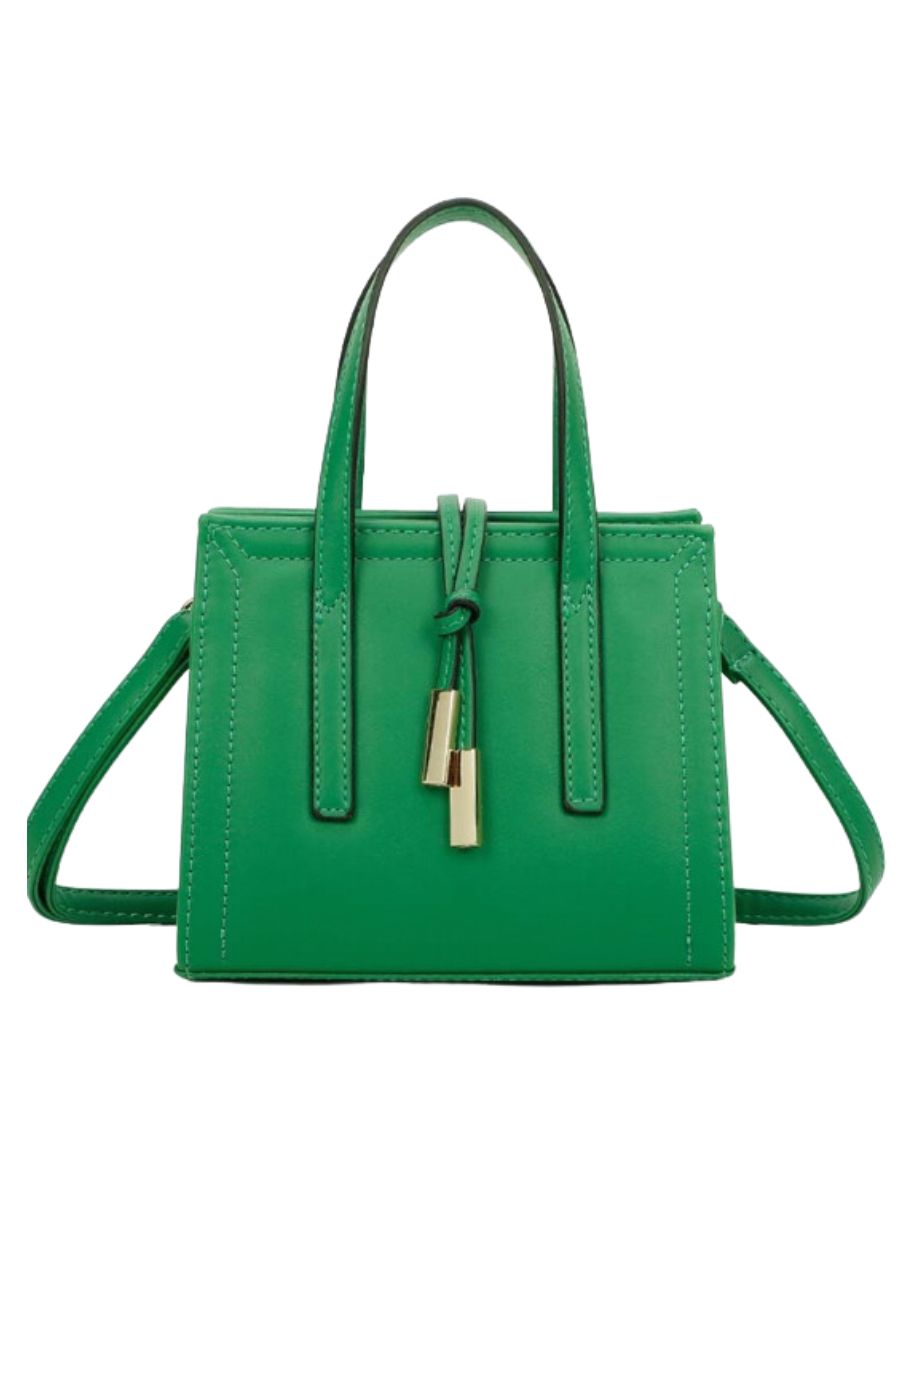 Ruby Bag in Green